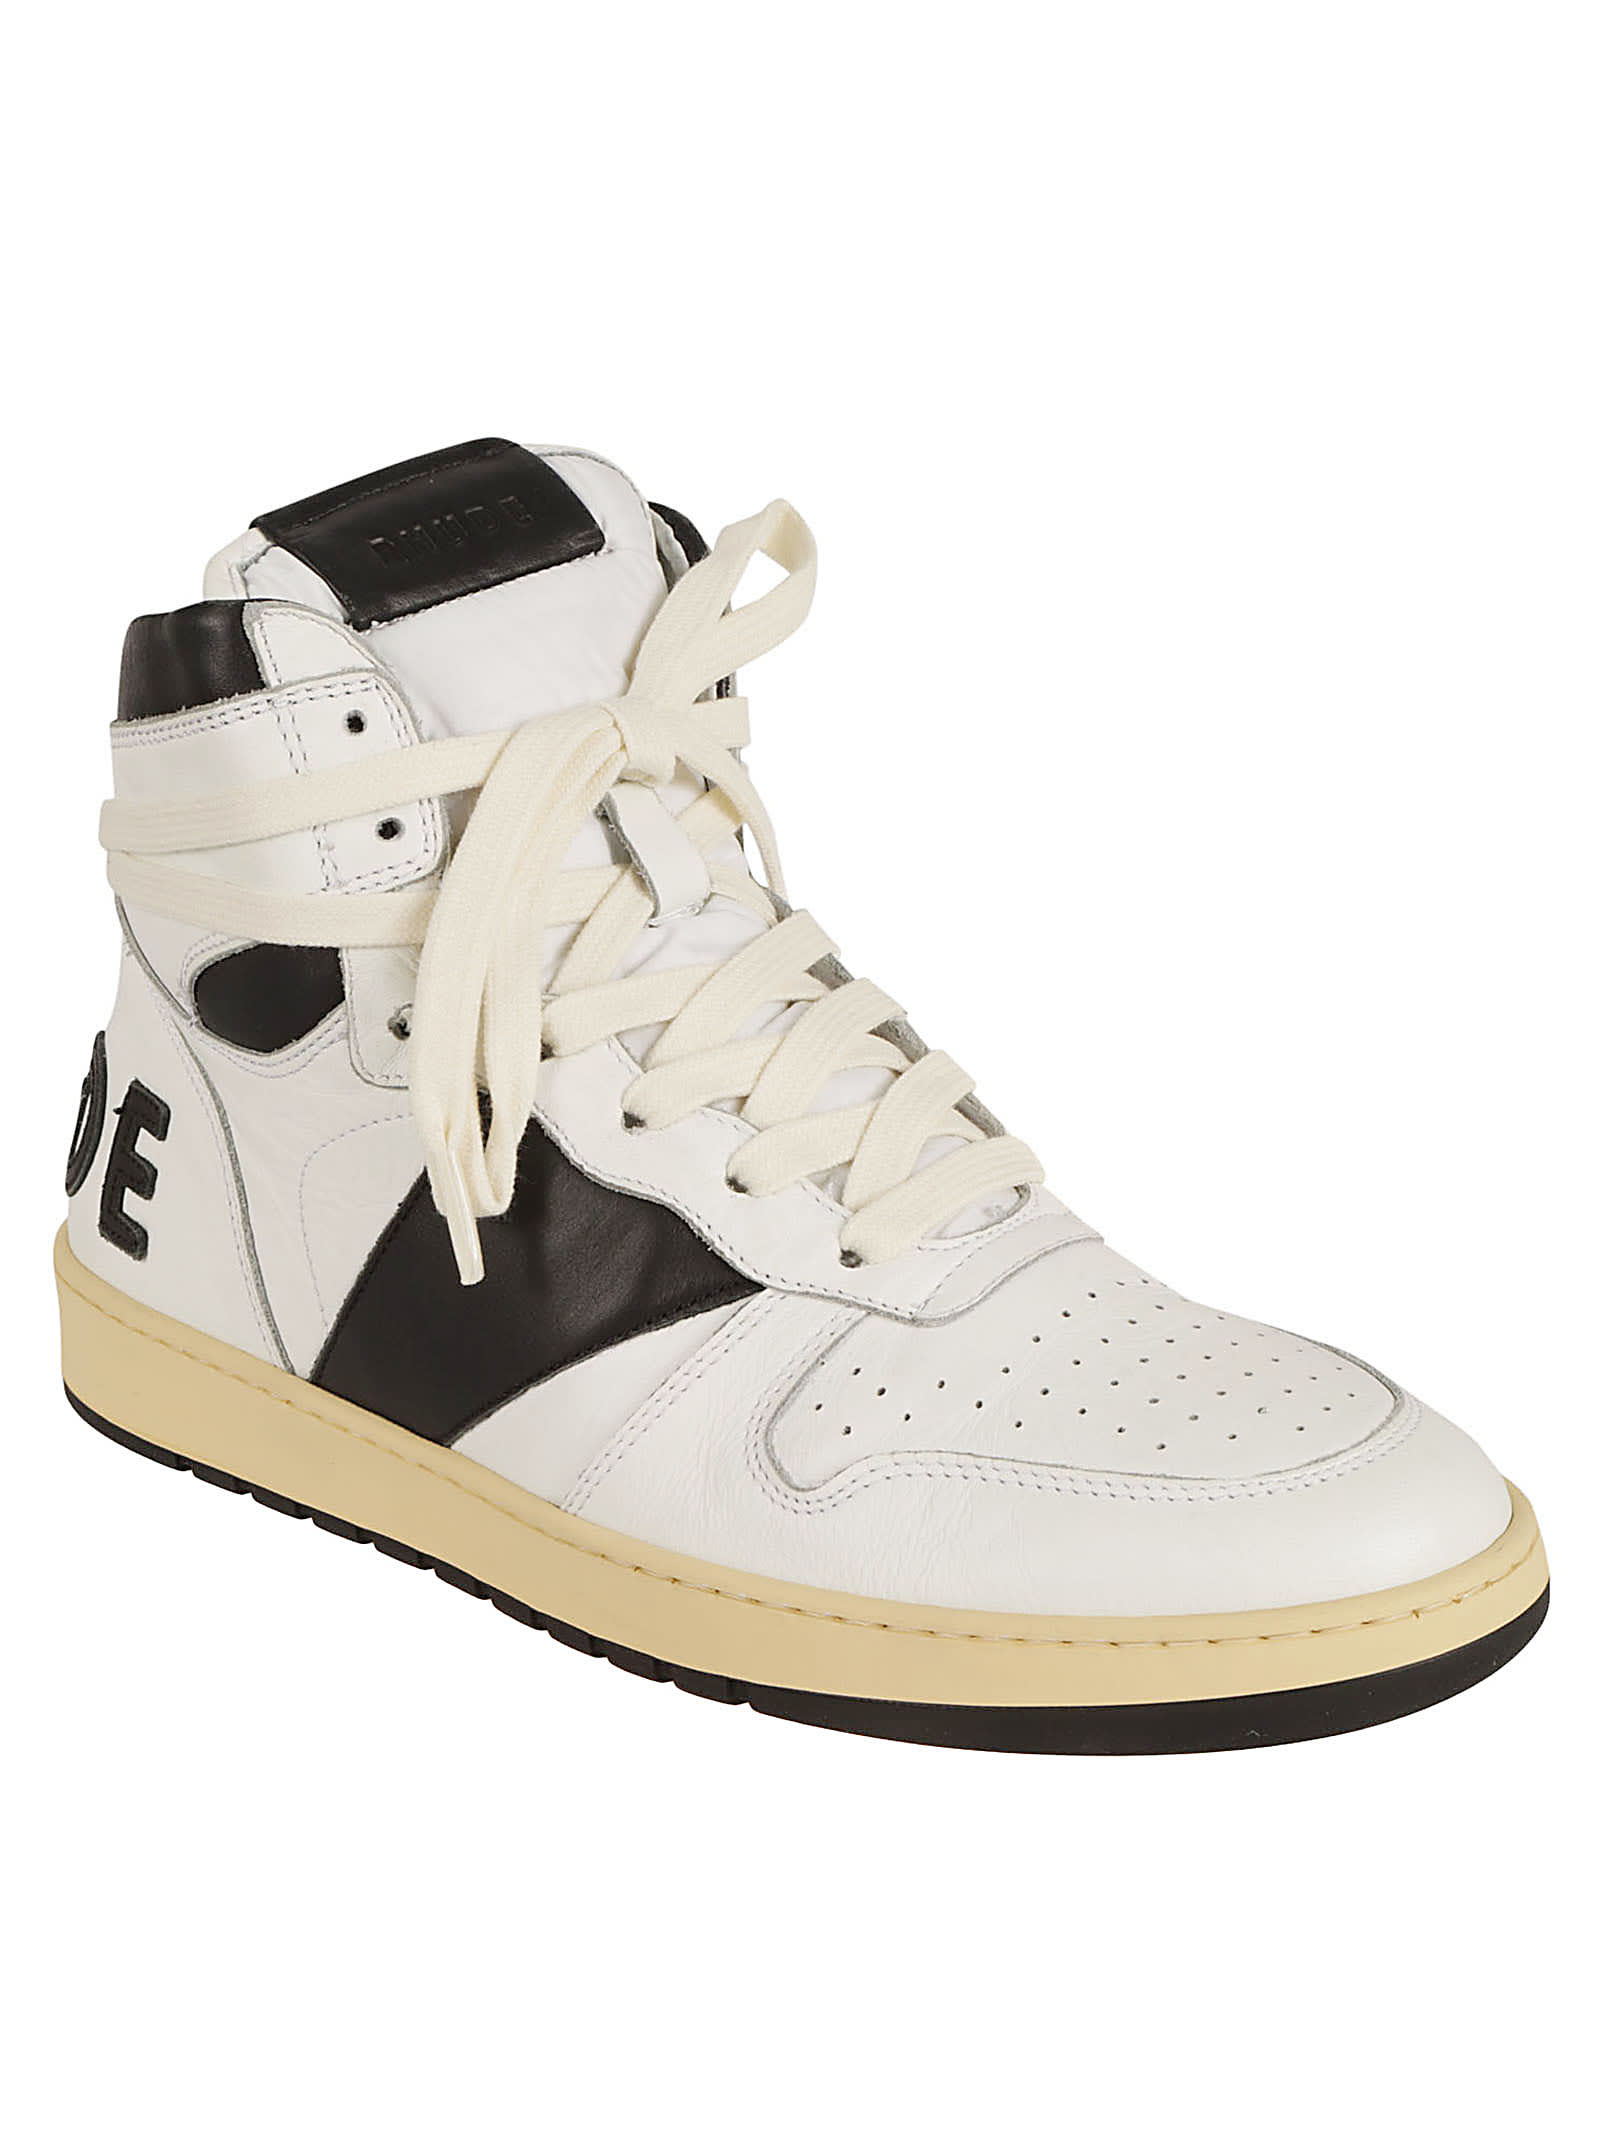 Shop Rhude Logo Embossed High Sneakers In White/black